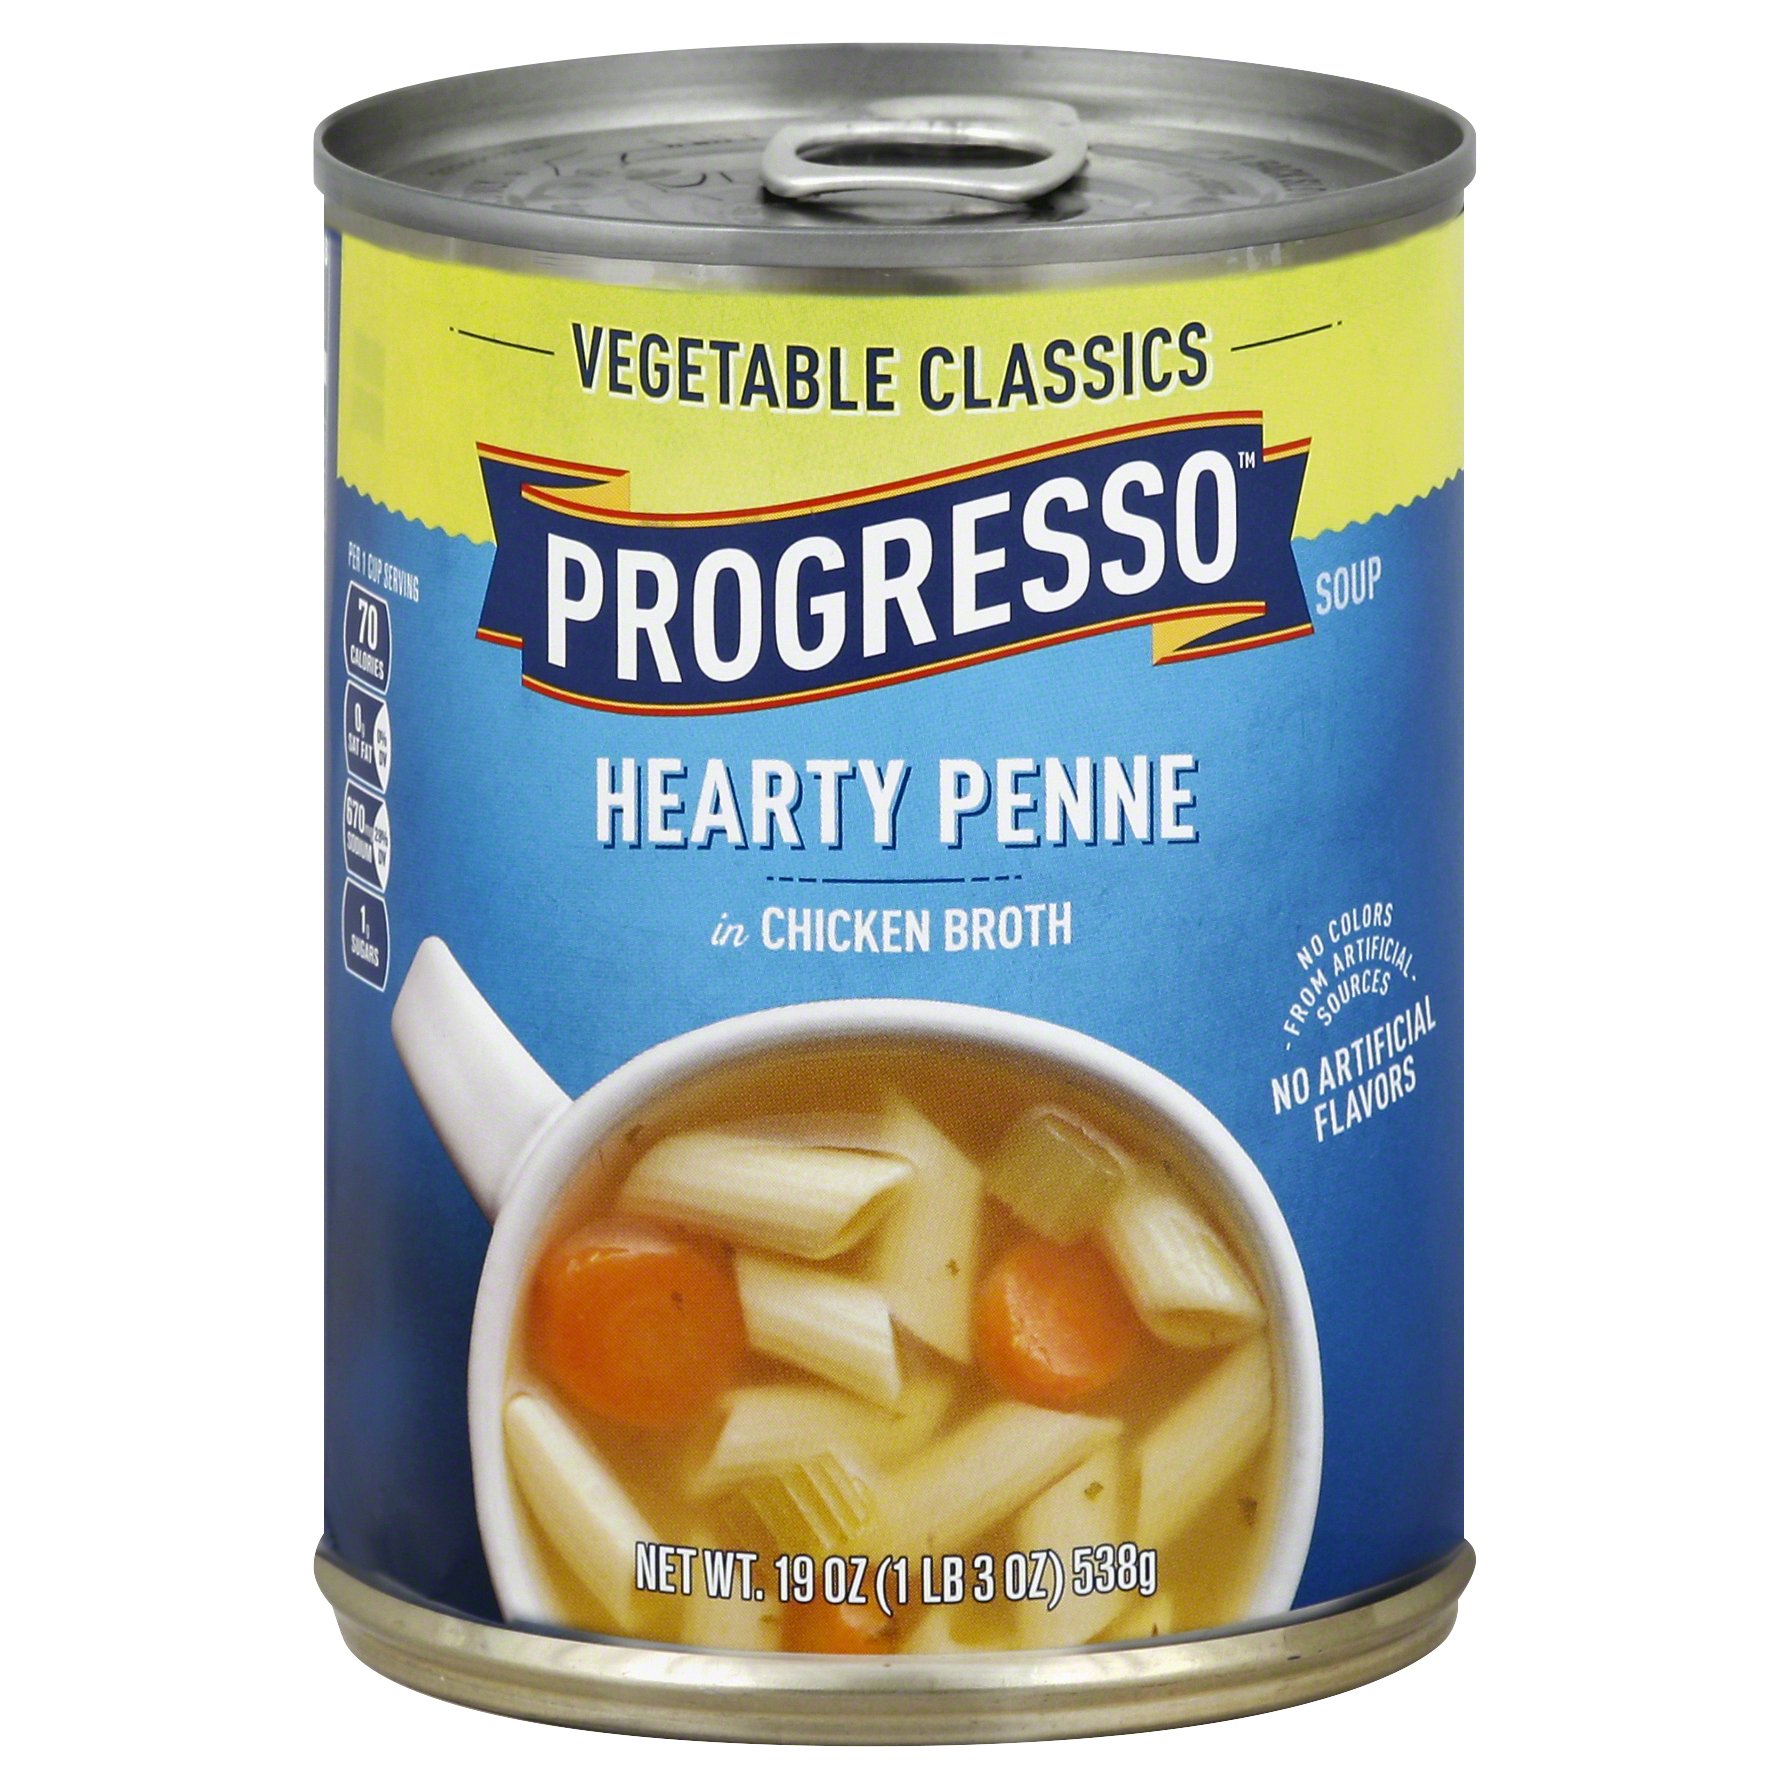 Progresso Hearty Penne in Chicken Broth Soup 19.0 OZ